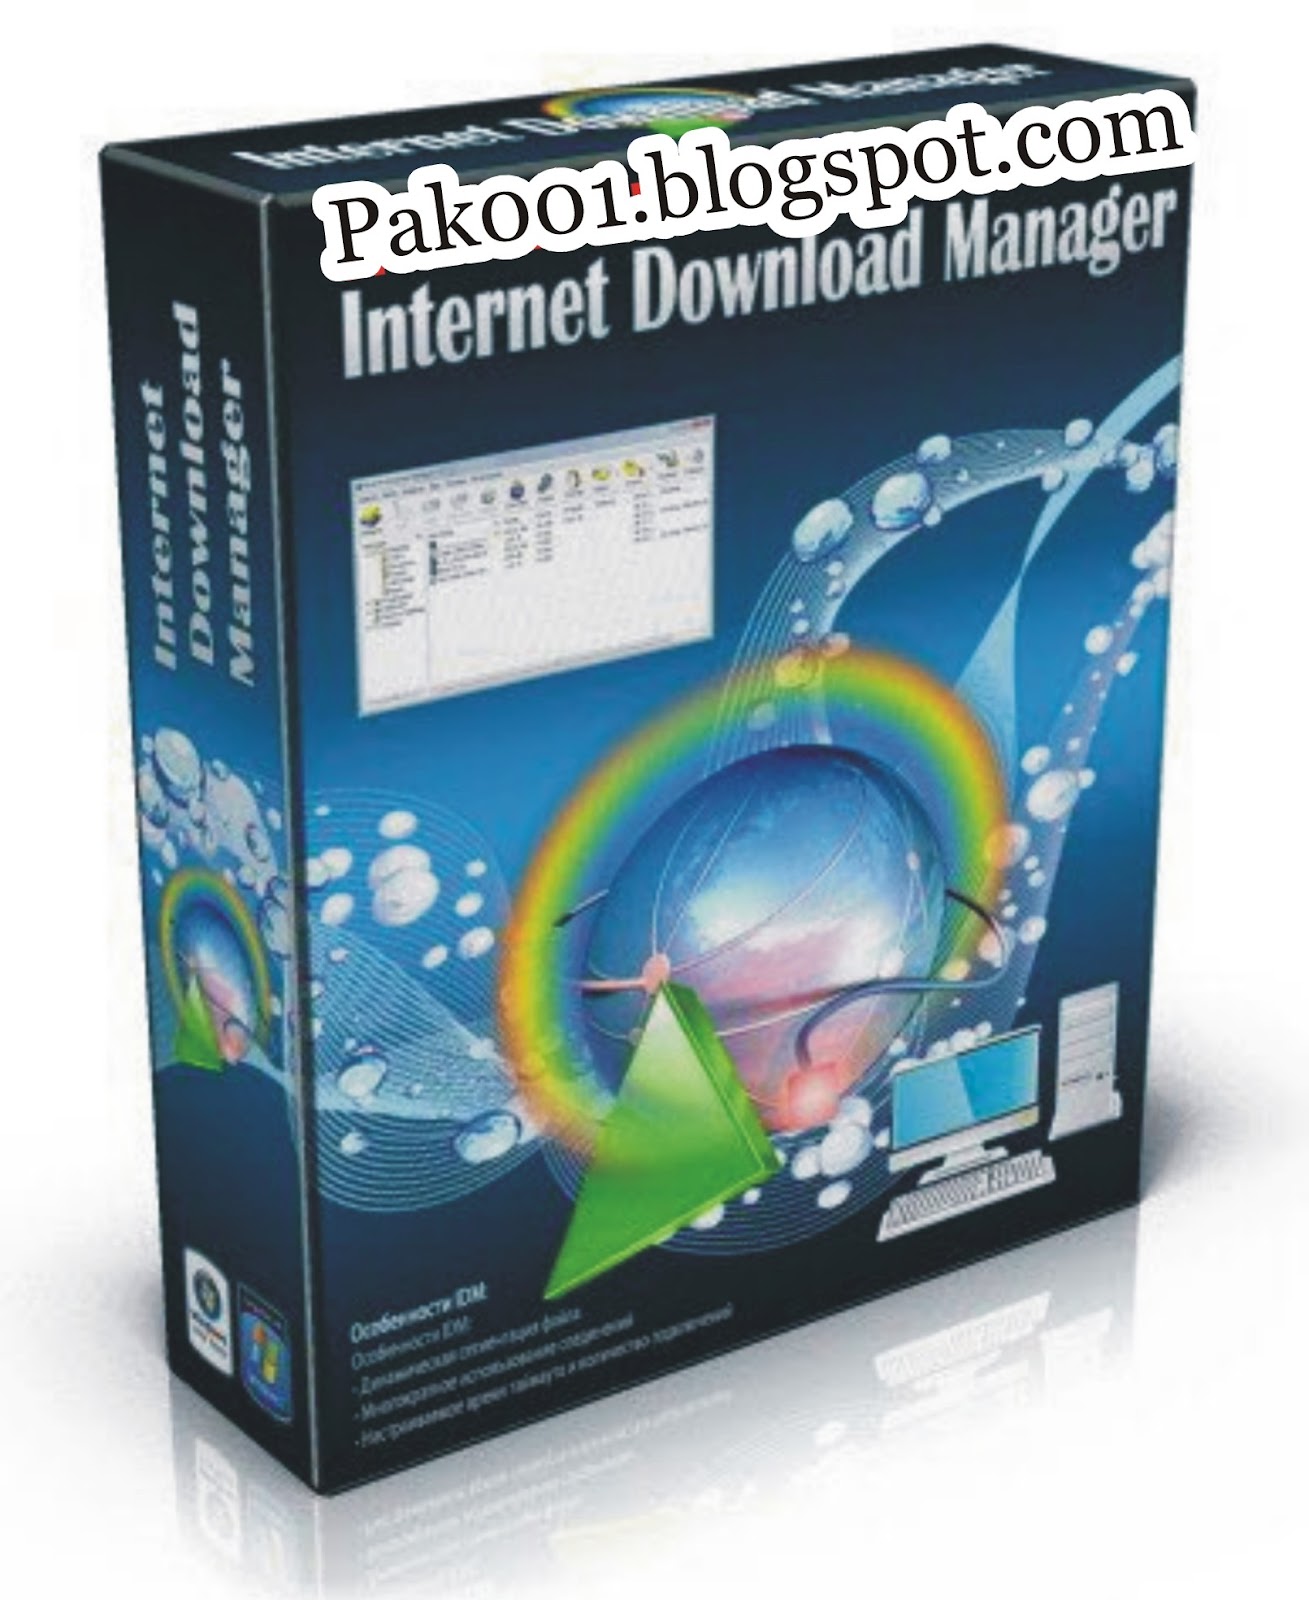 Internet Download Manager 6.7 Full Version Free Download